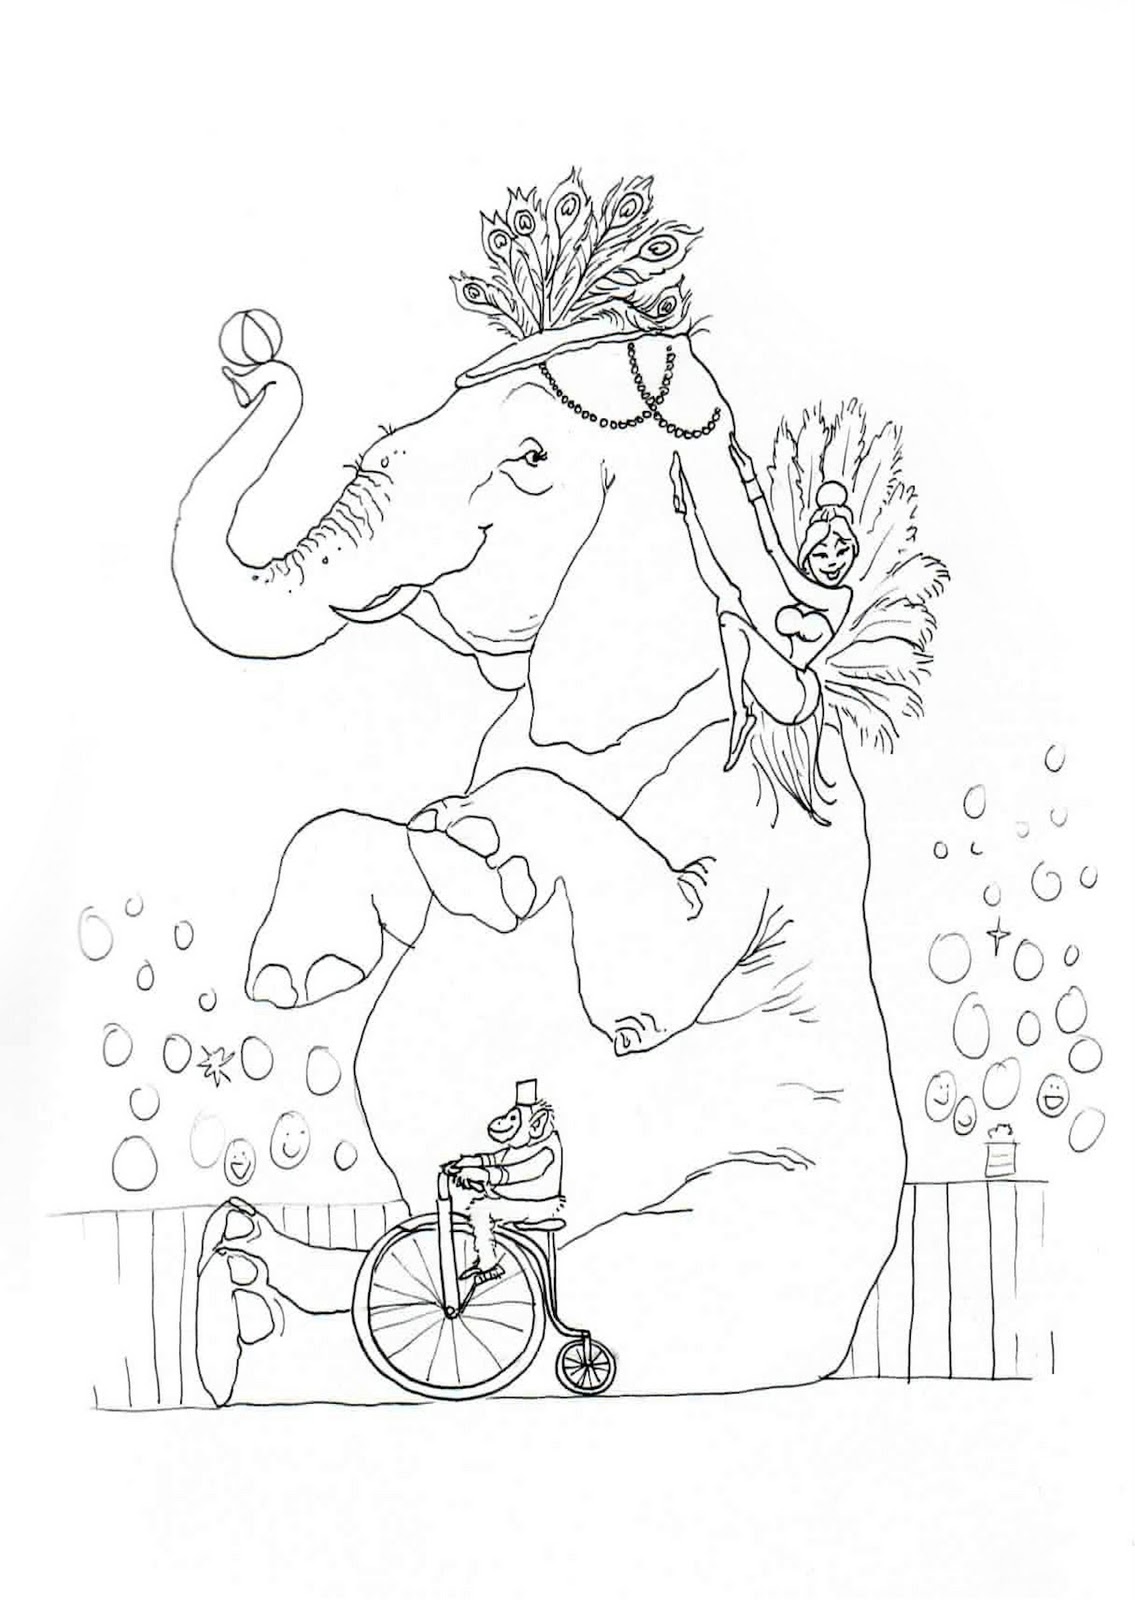 coloring circus elephant waldo where illustrations printable hilary knight animals wally illustration animal template sketch